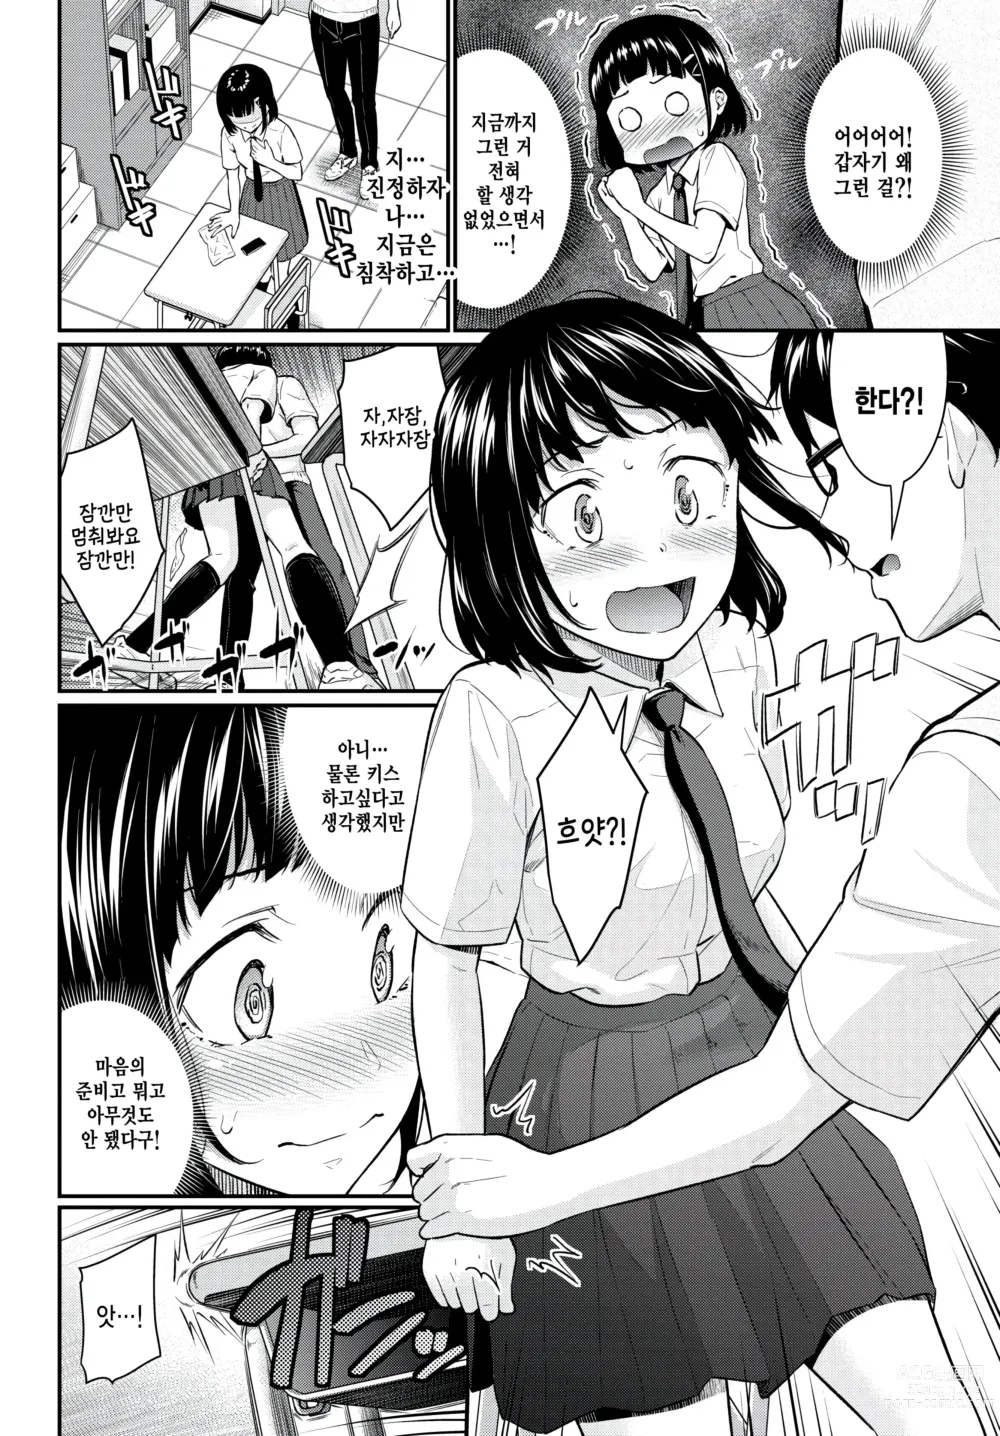 Page 4 of manga Kakushigoto